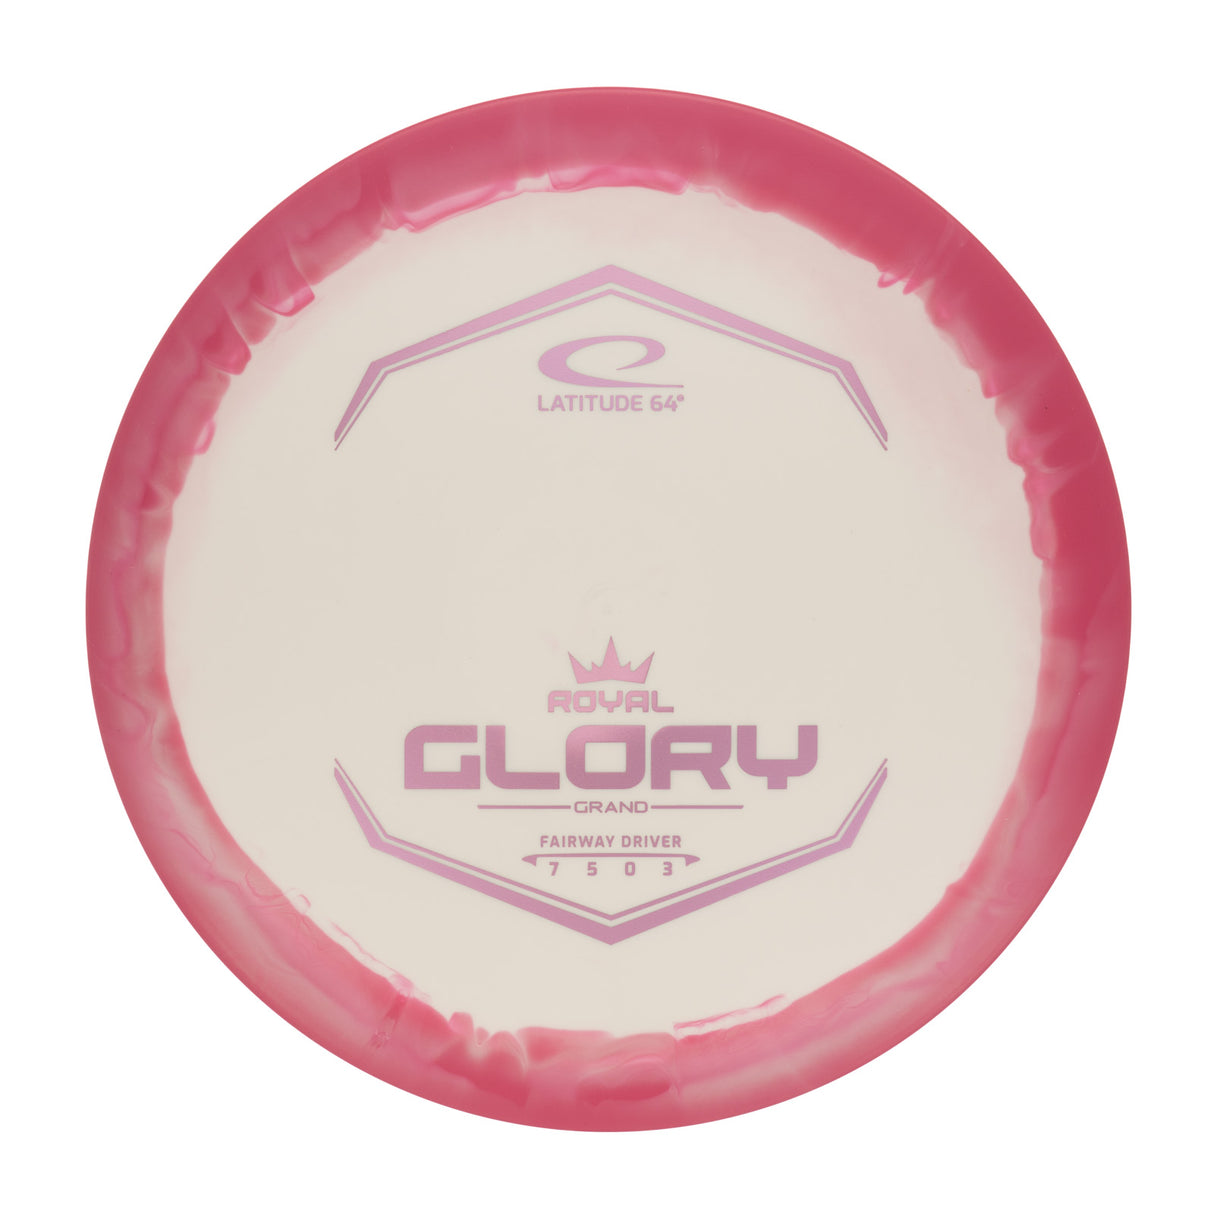 Latitude 64 Glory - Royal Grand Orbit 175g | Style 0016